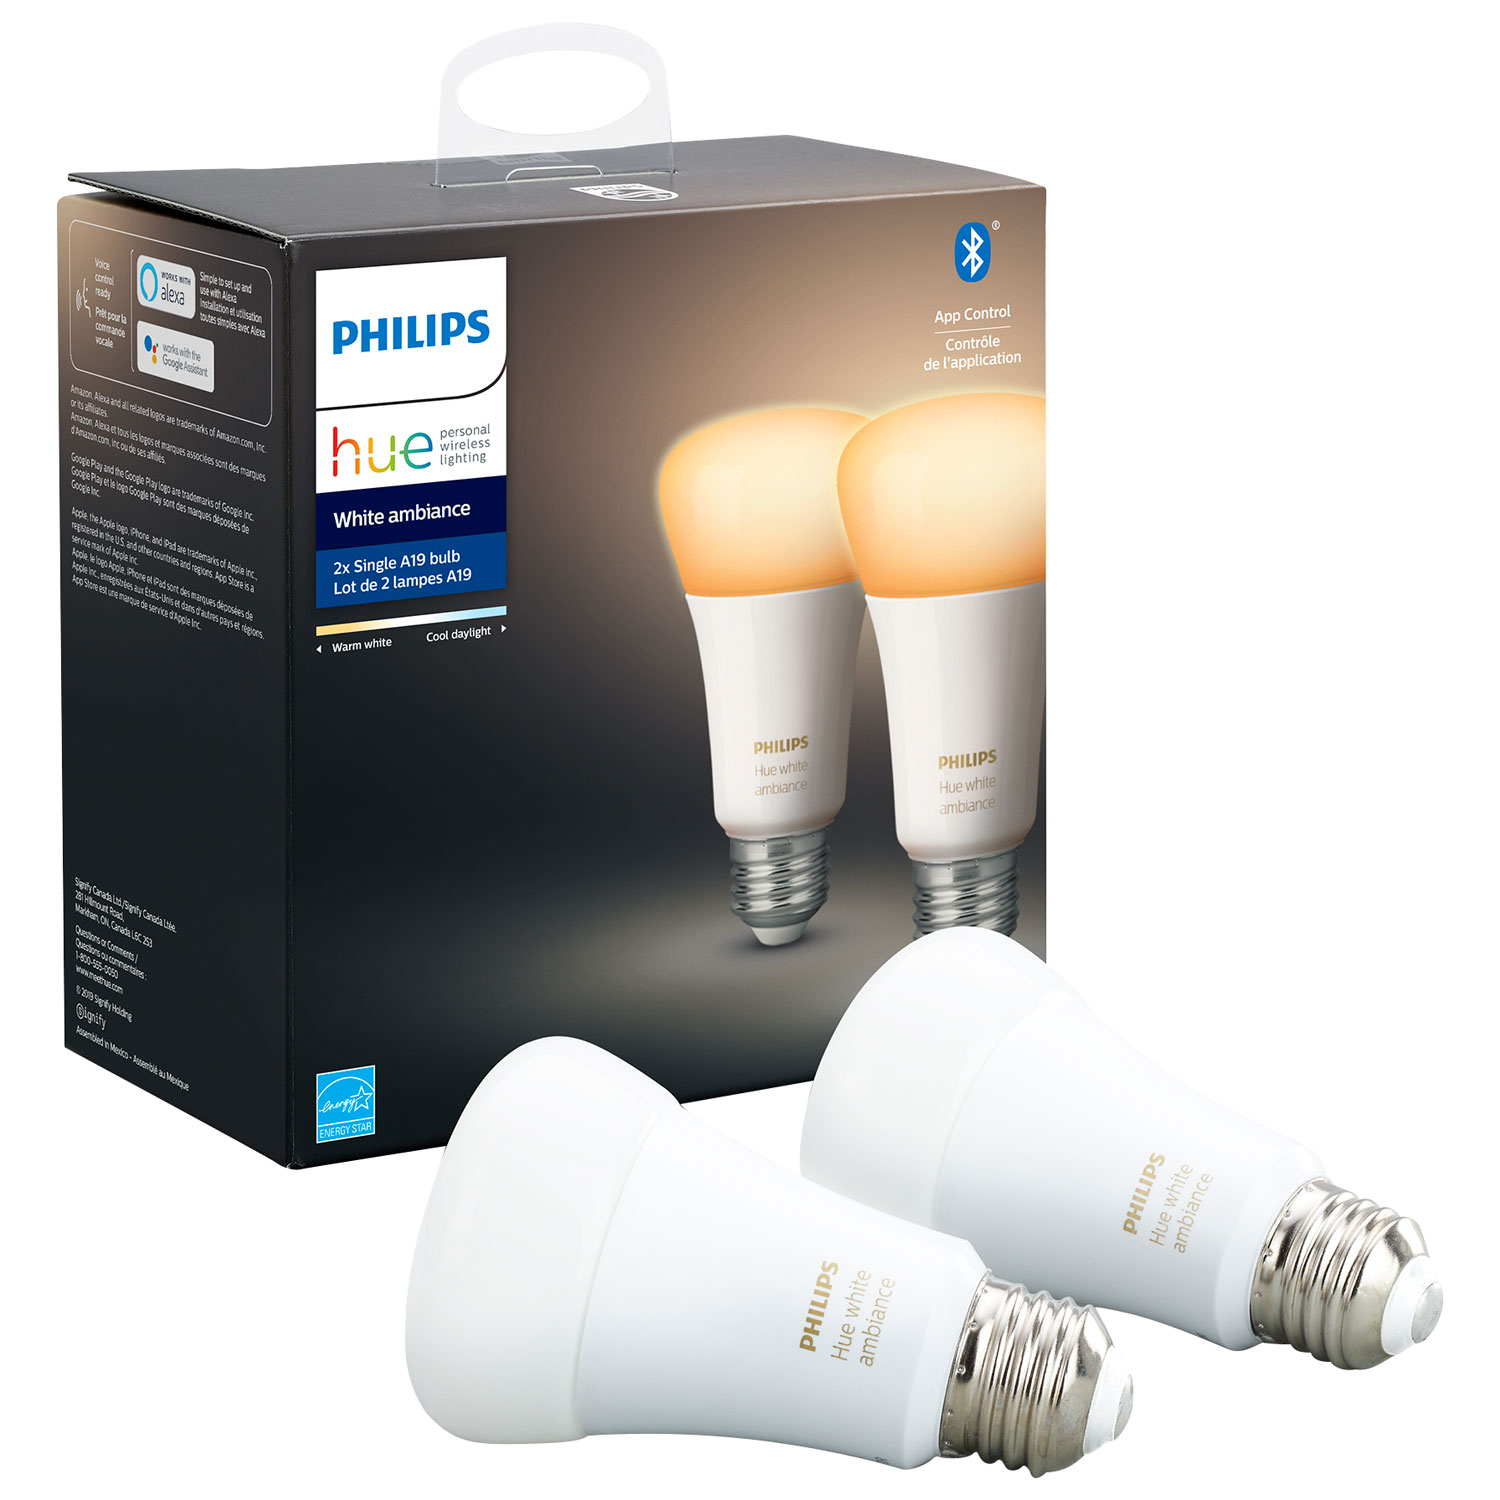 Philips Hue A19 Smart Bluetooth LED Light Bulb - White Ambiance